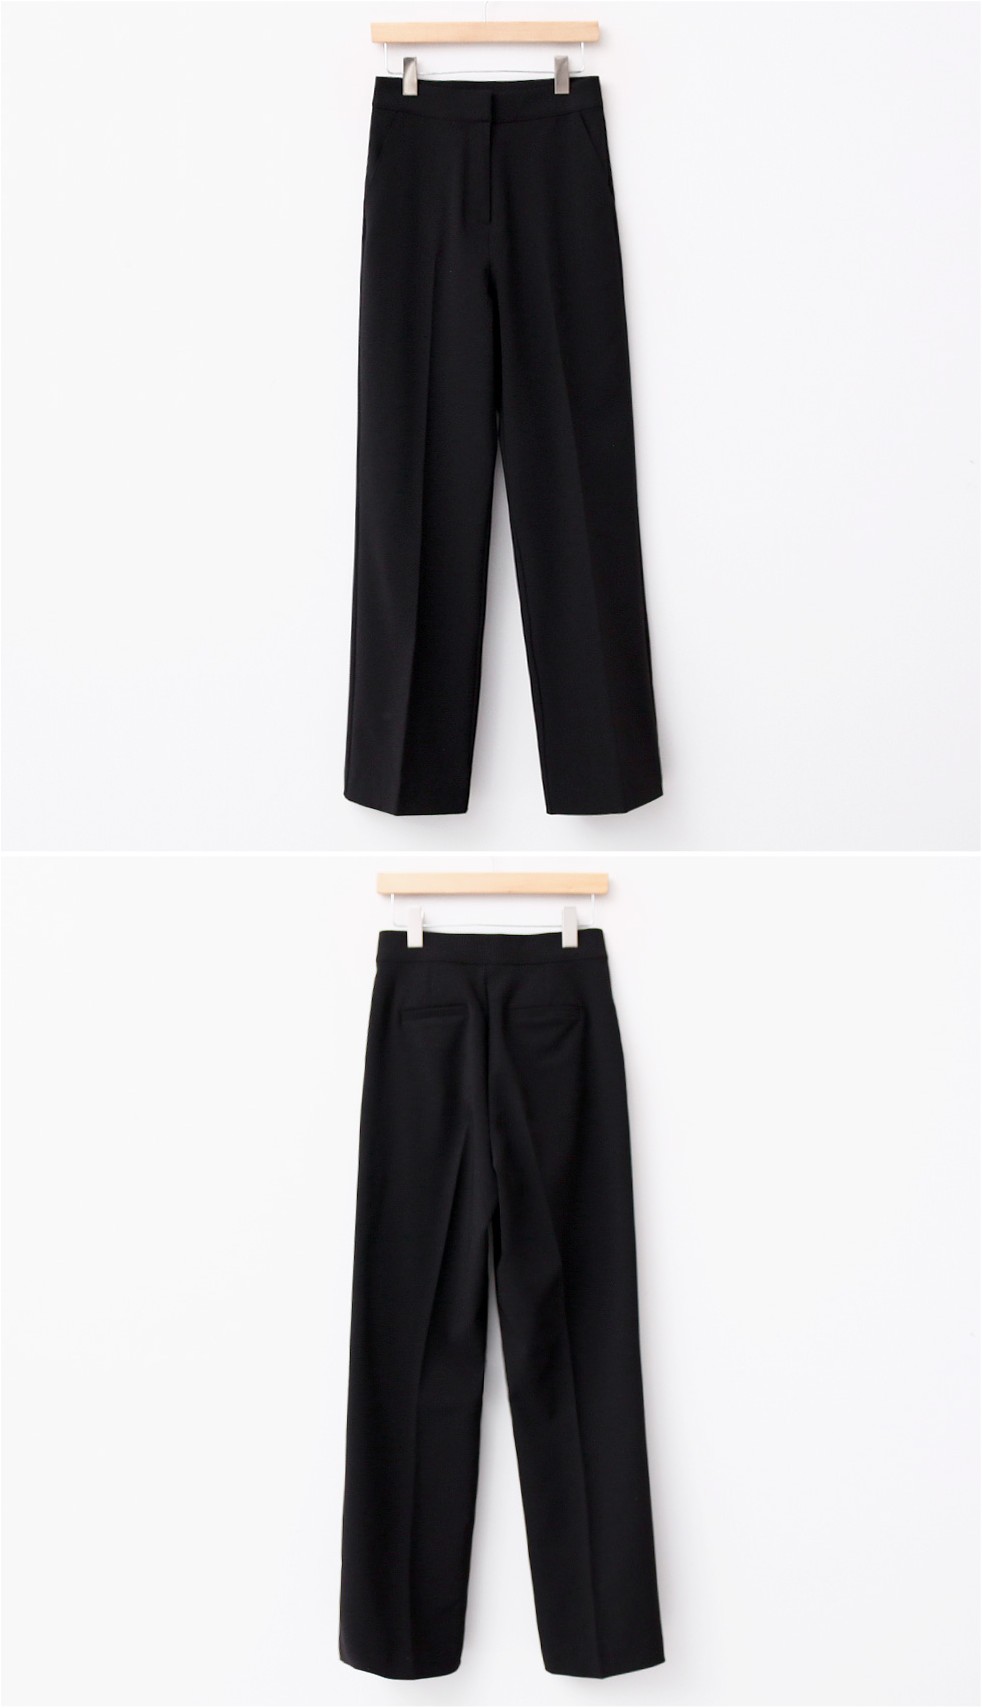 Envy Look World Comfort Maxy Long Slacks | Wide for Women | KOODING